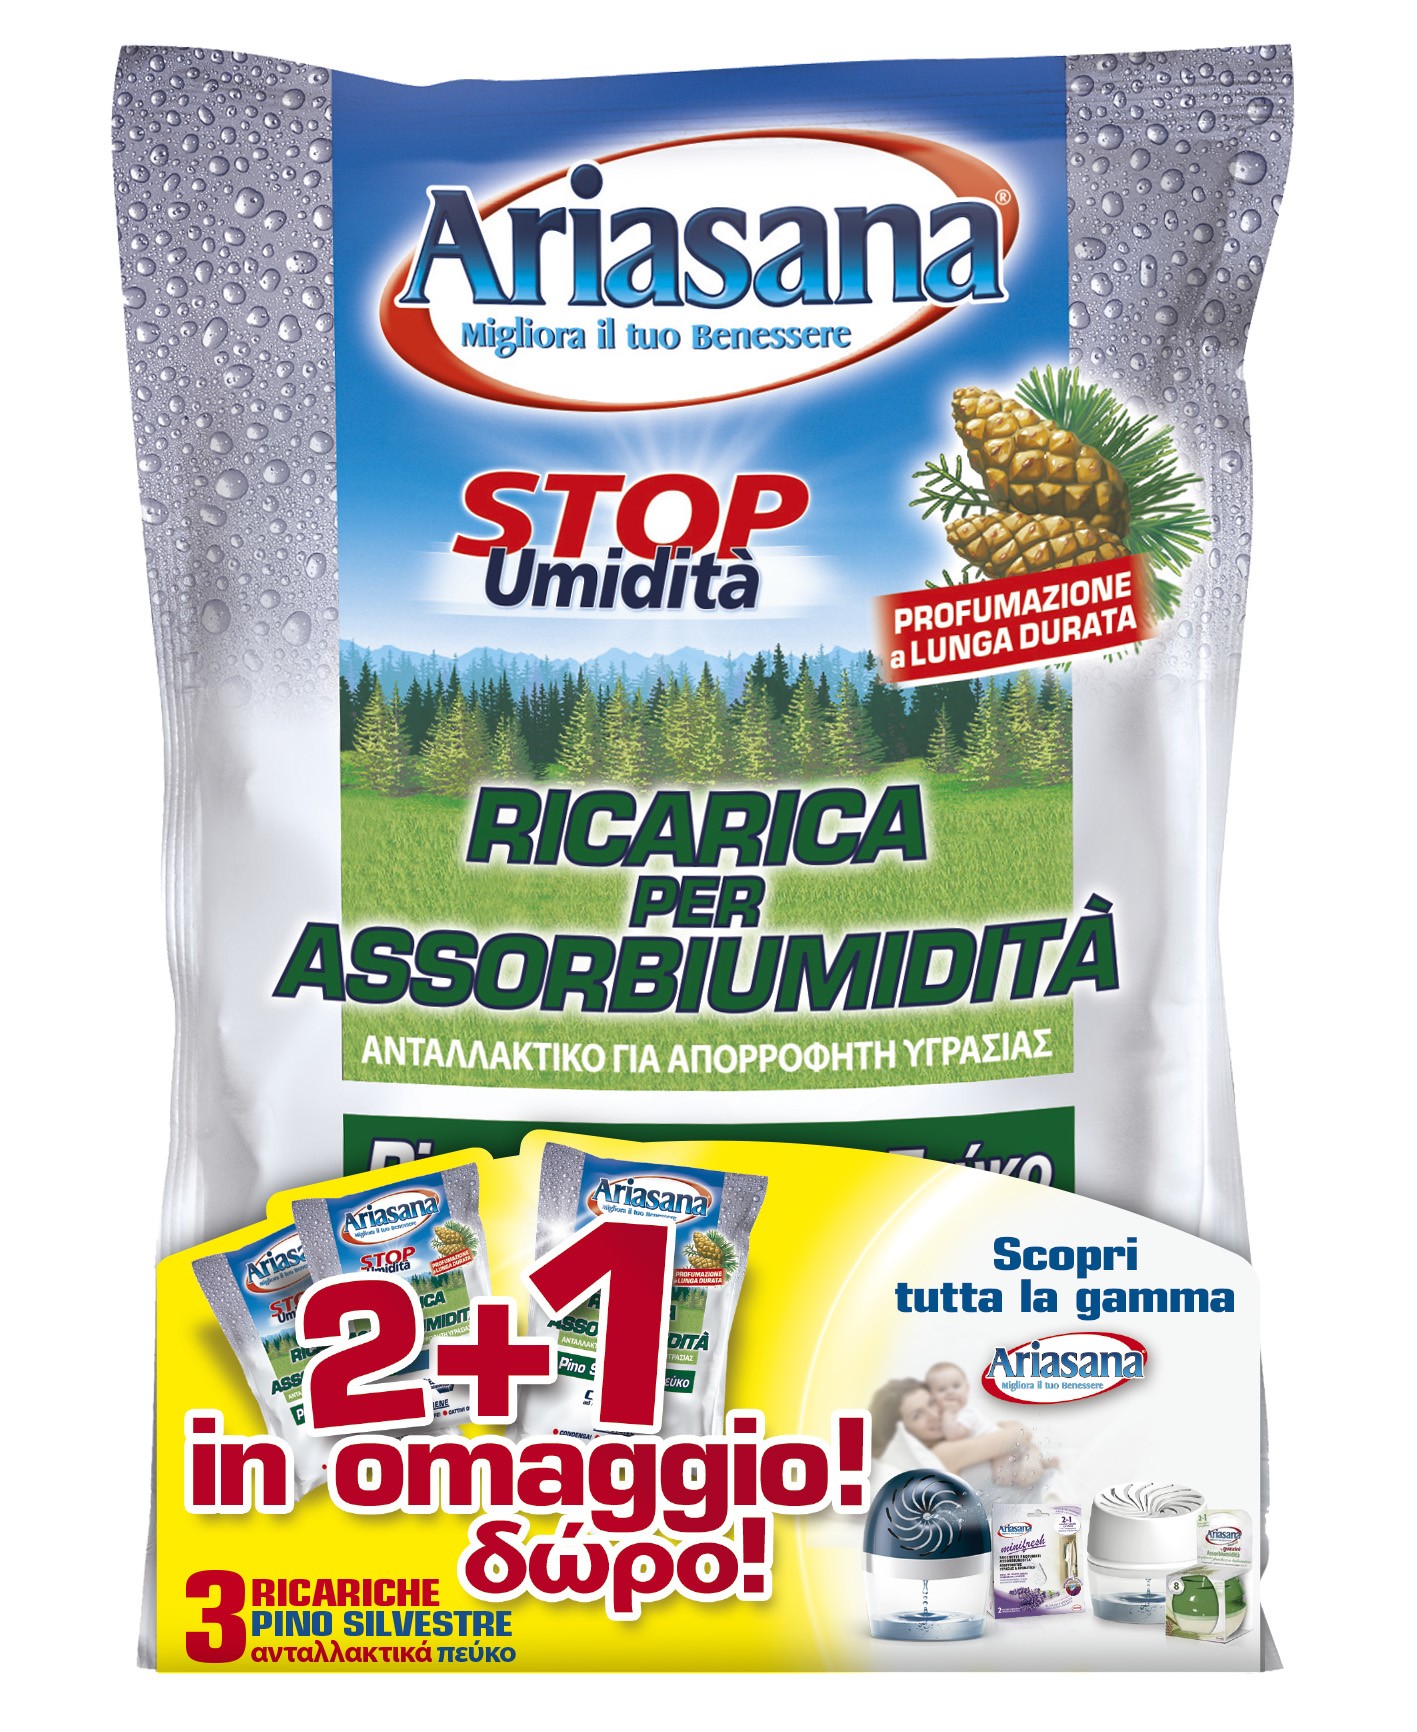 PSK MEGA STORE - Ariasana Ricarica Agrumi di Sicilia 2+1 busta 450g -  8004630921188 - Ariasana - 6,49 €